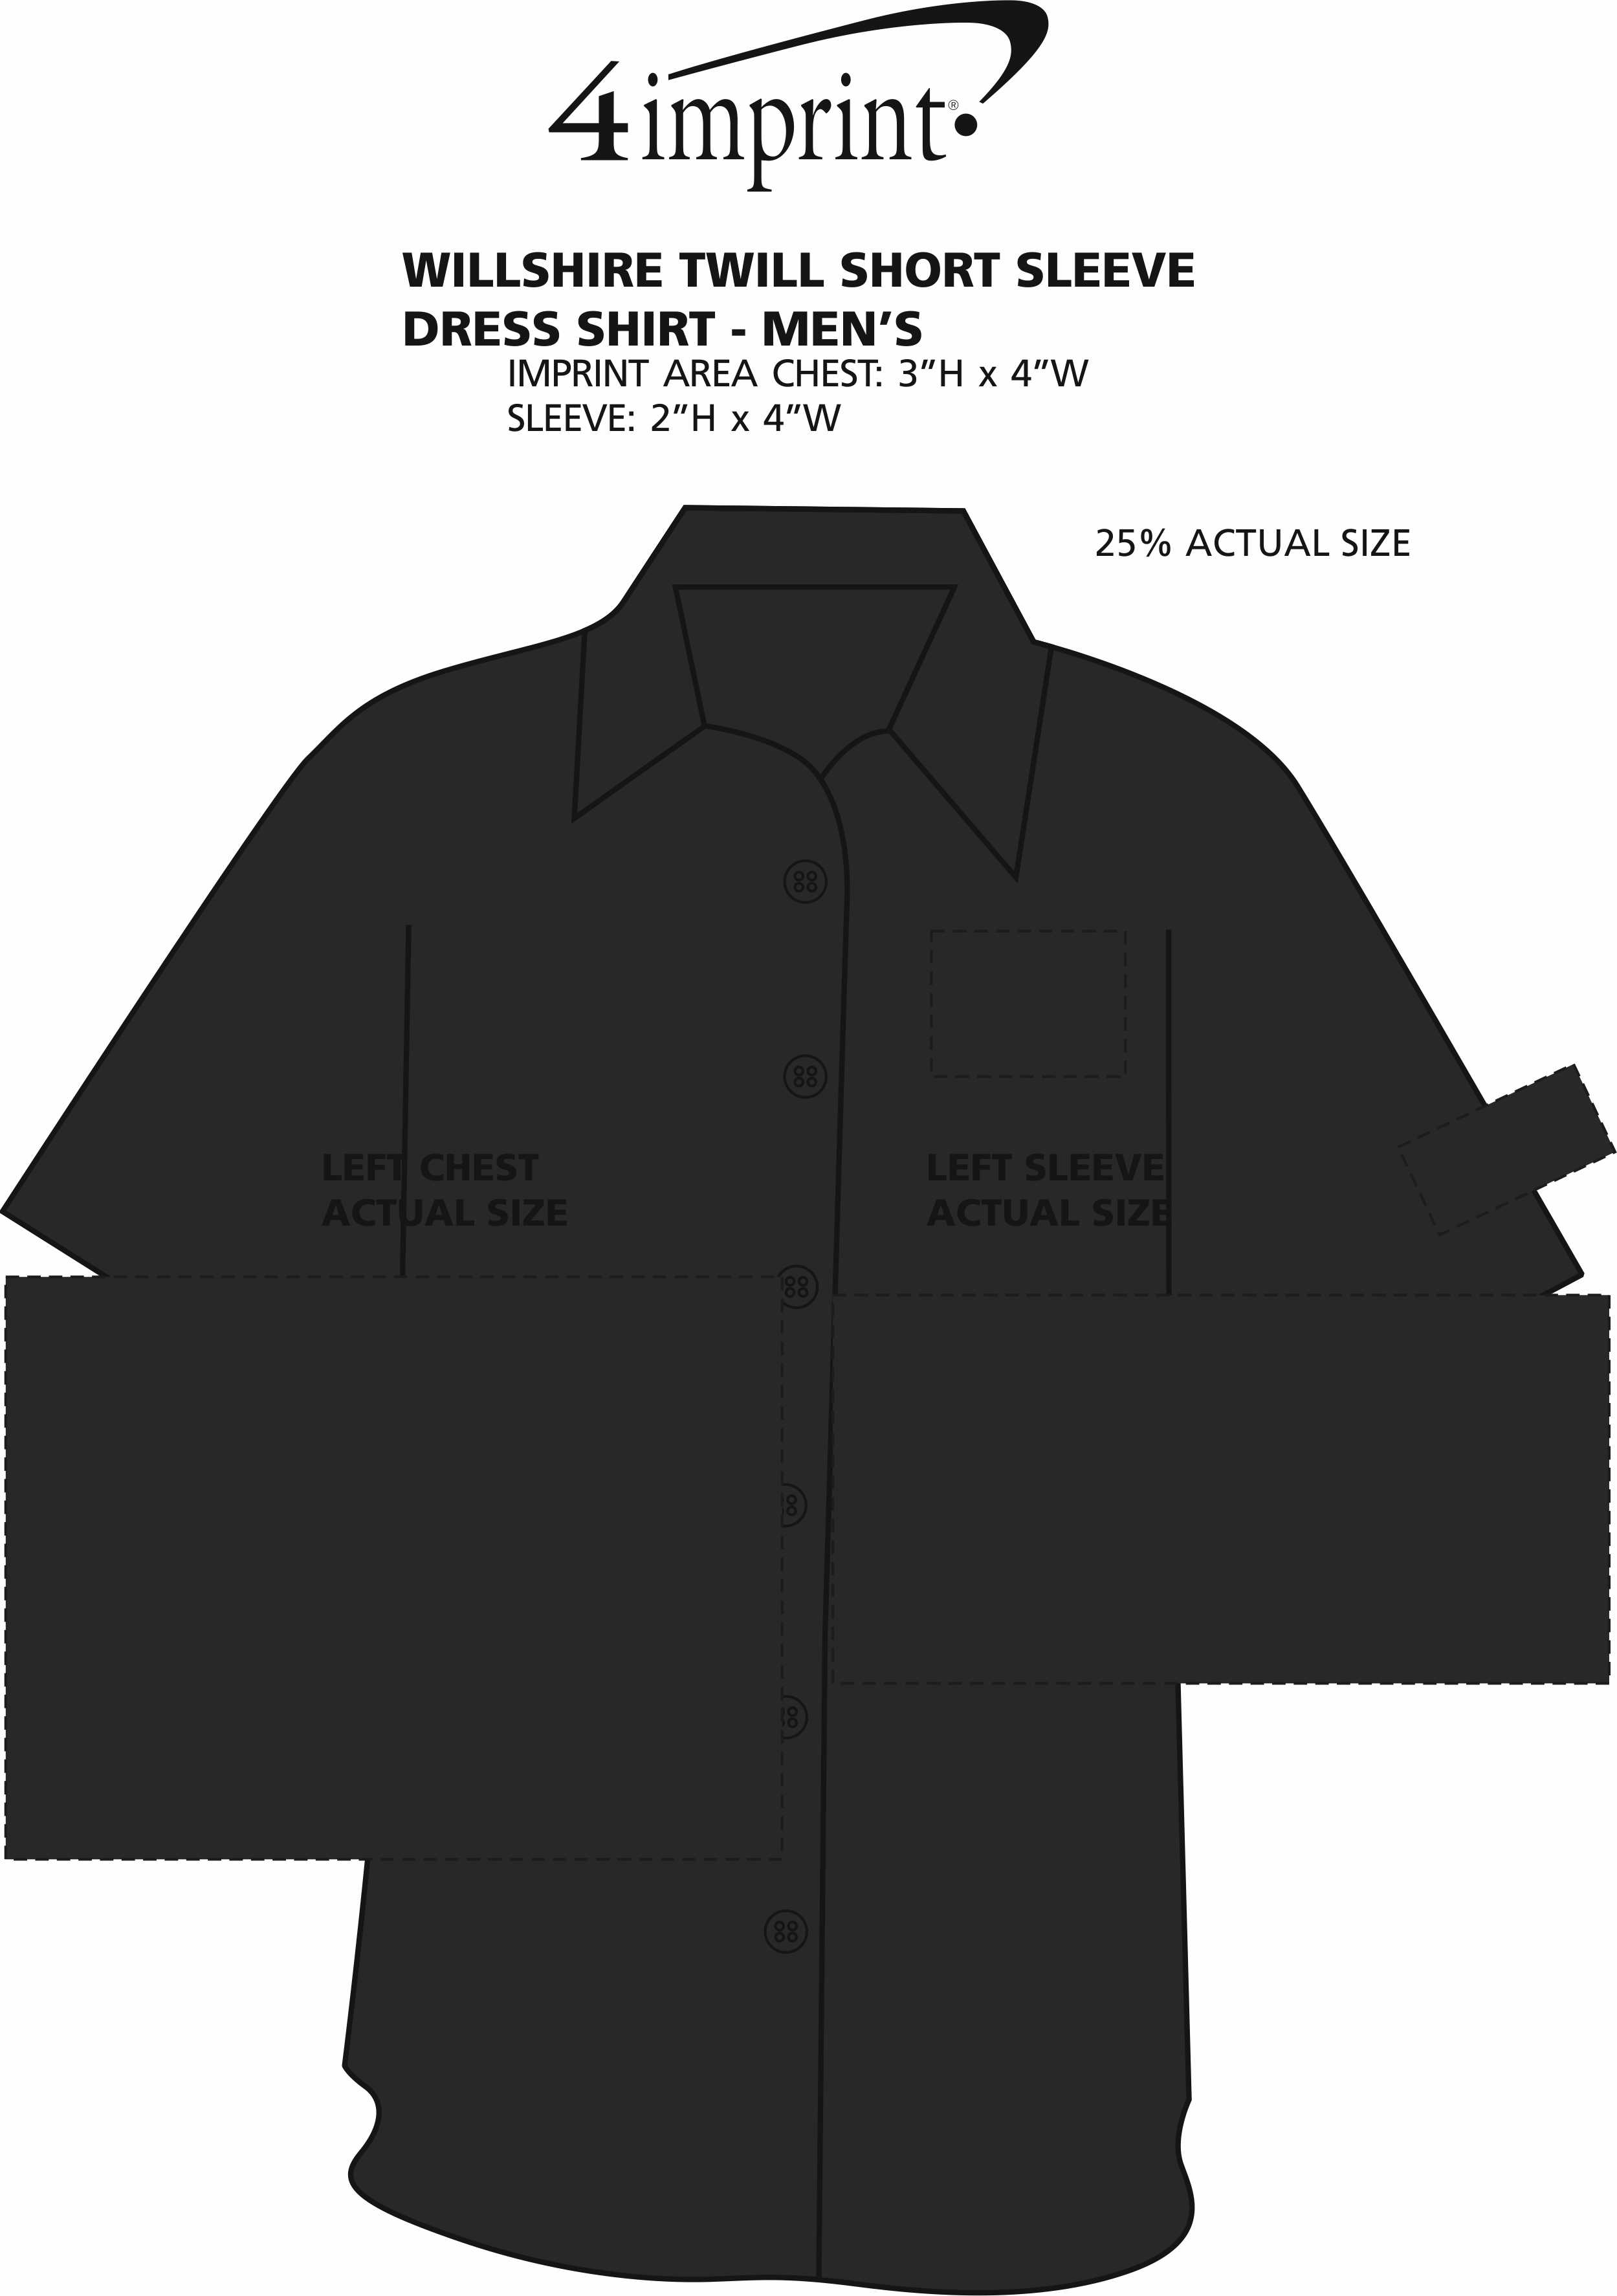 Imprint Area of Willshire Twill Short Sleeve Dress Shirt - Men's